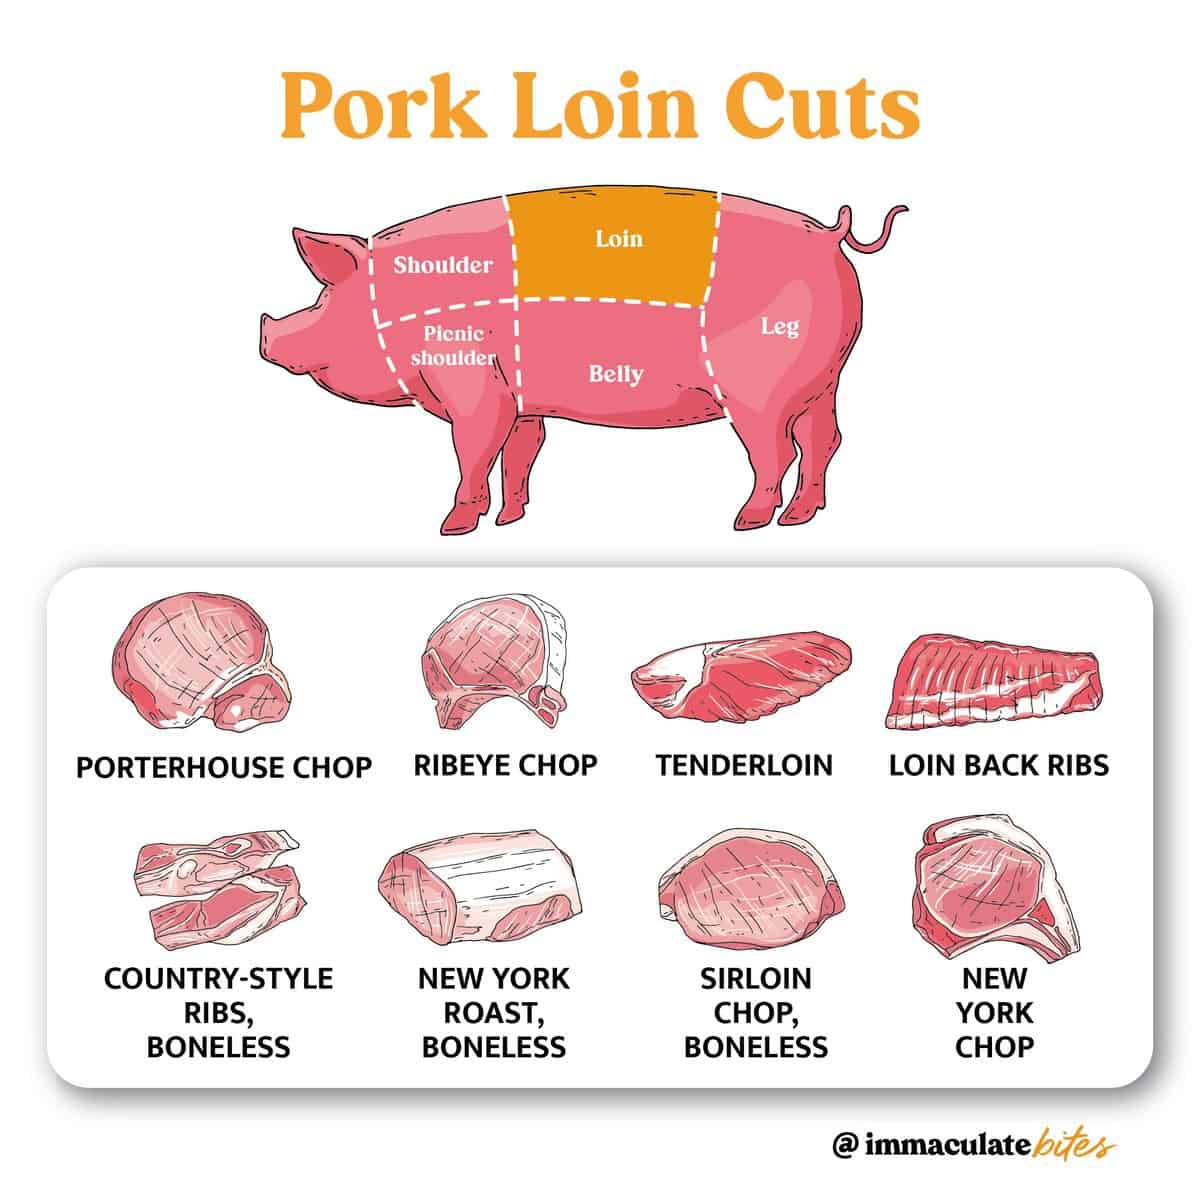 Pork Loin Cuts